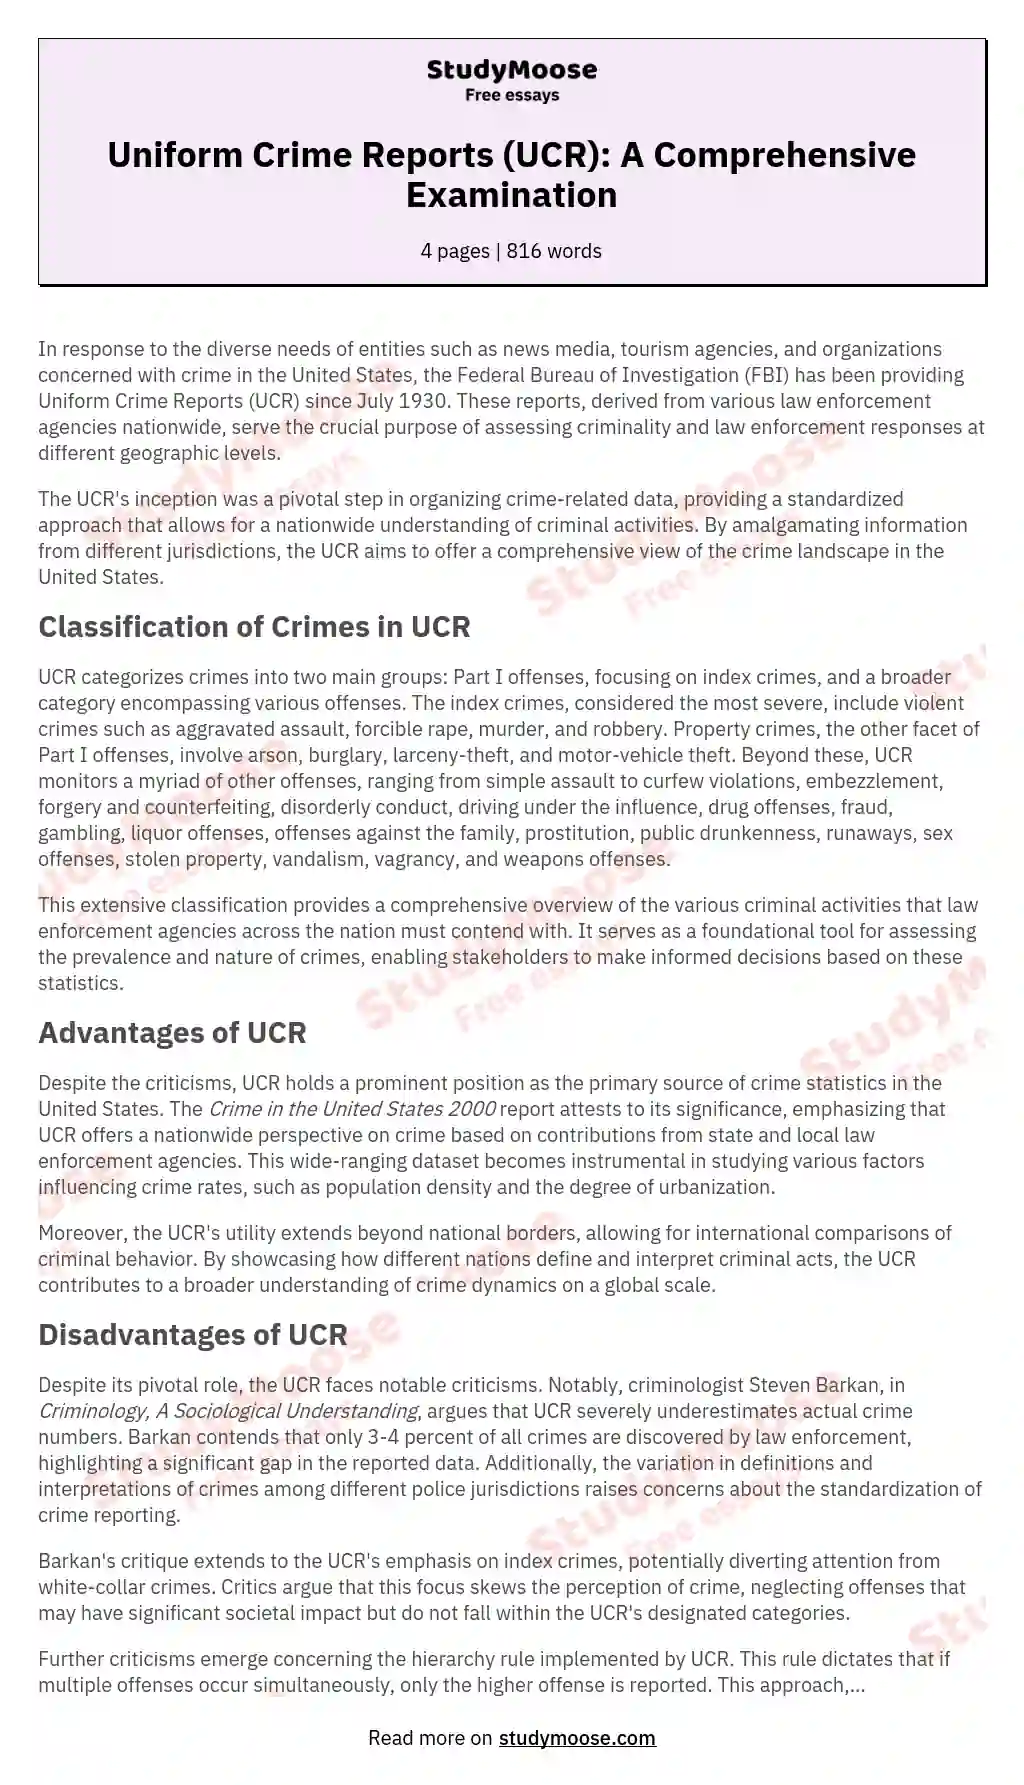 Uniform Crime Reports (UCR): A Comprehensive Examination essay